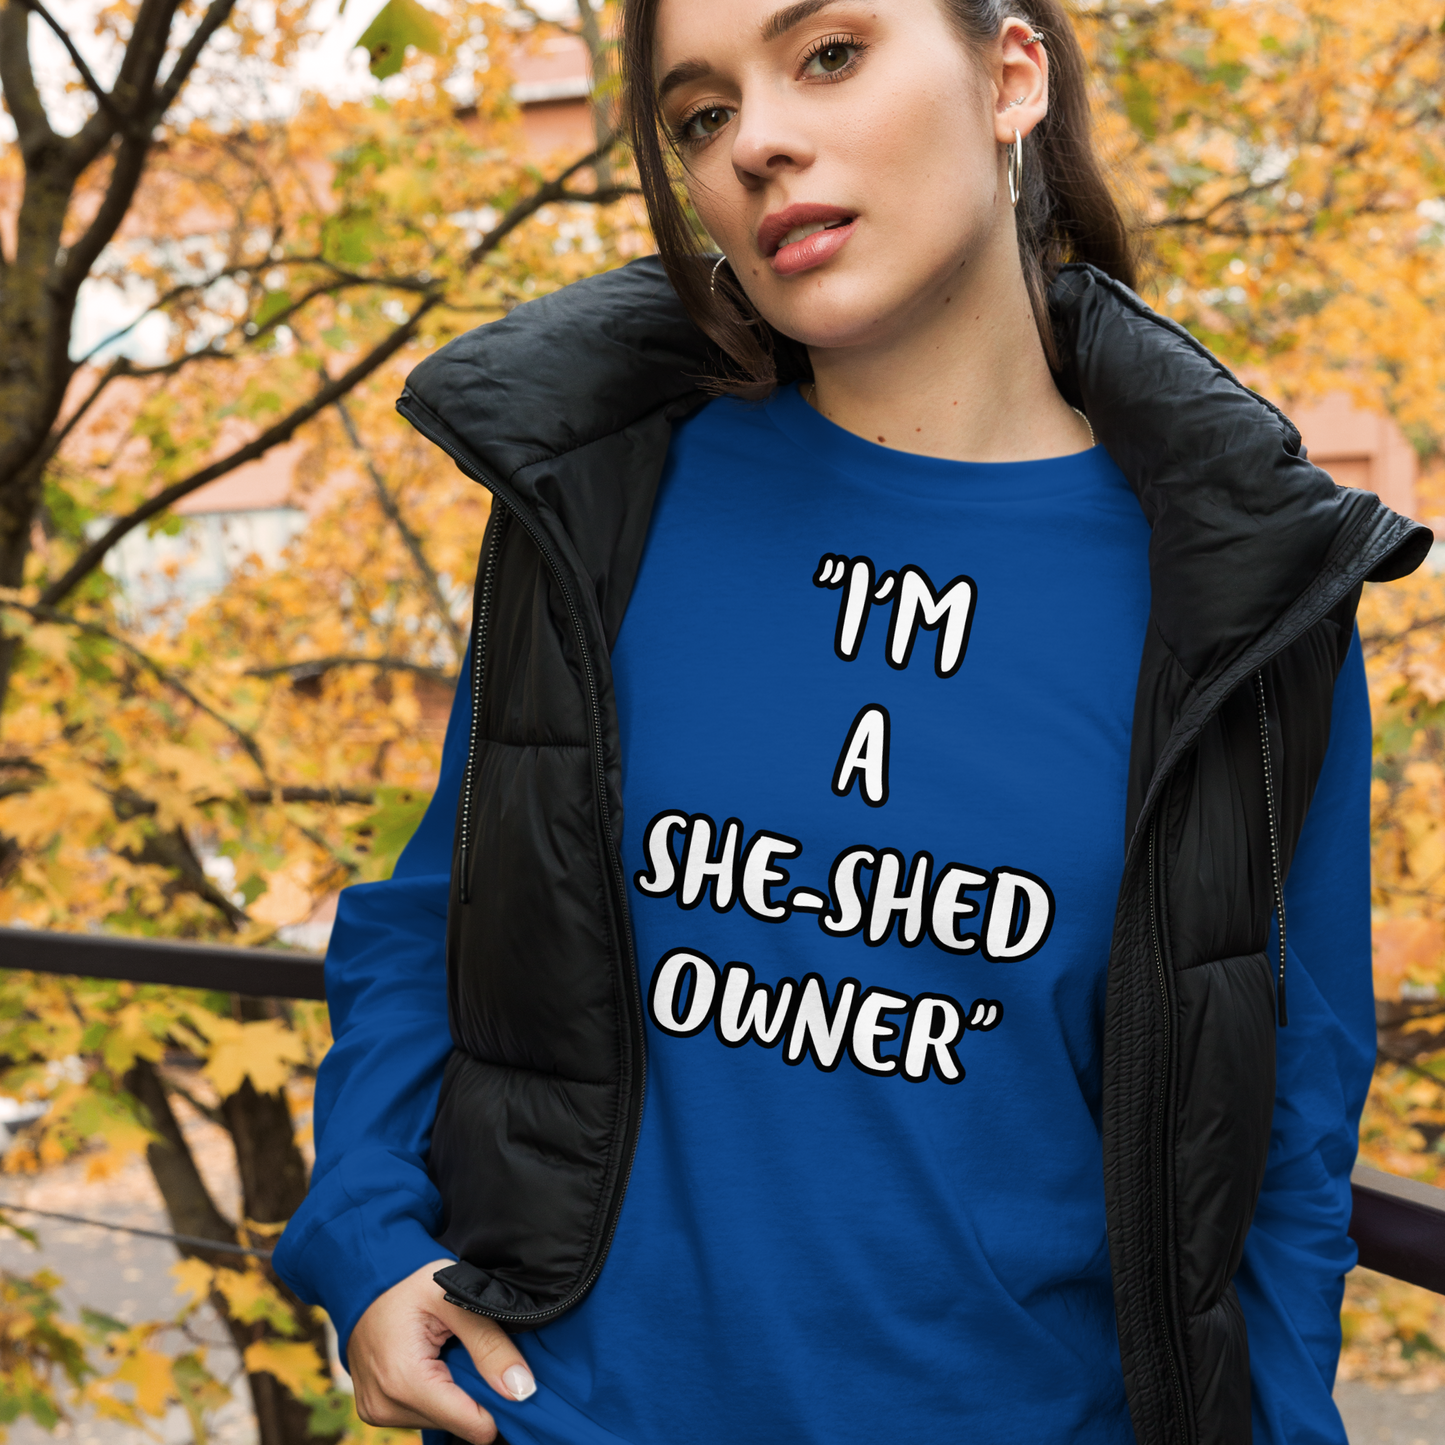 She-Shed Owner Long Sleeve Shirt